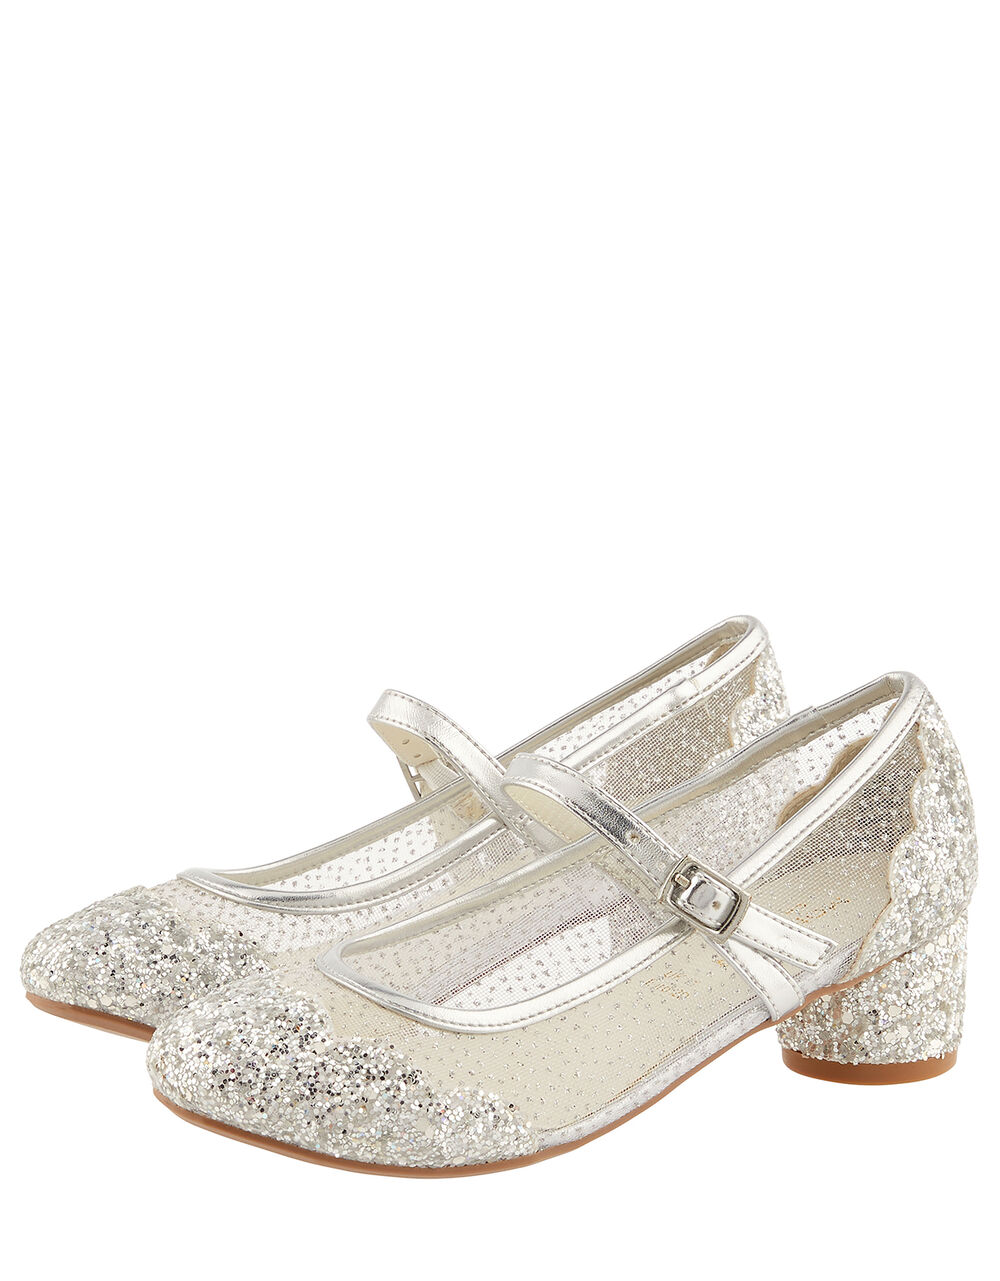 Children Children's Shoes & Sandals | Anabelle Scallop Glitter Princess Shoes Silver - GW36814